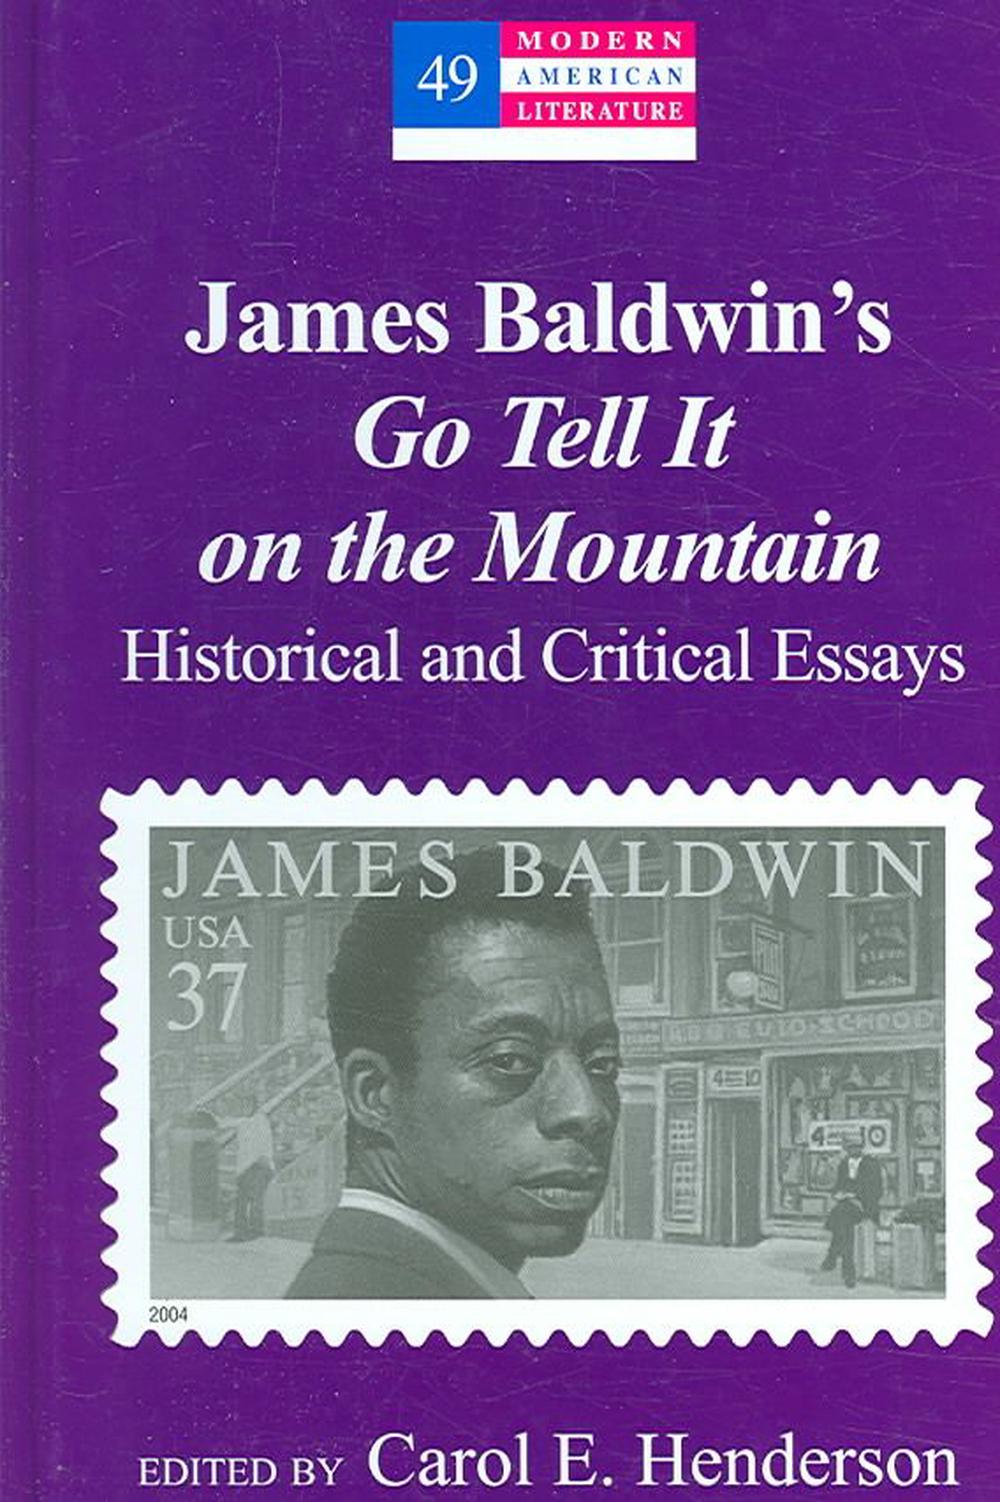 james baldwin collection of essays